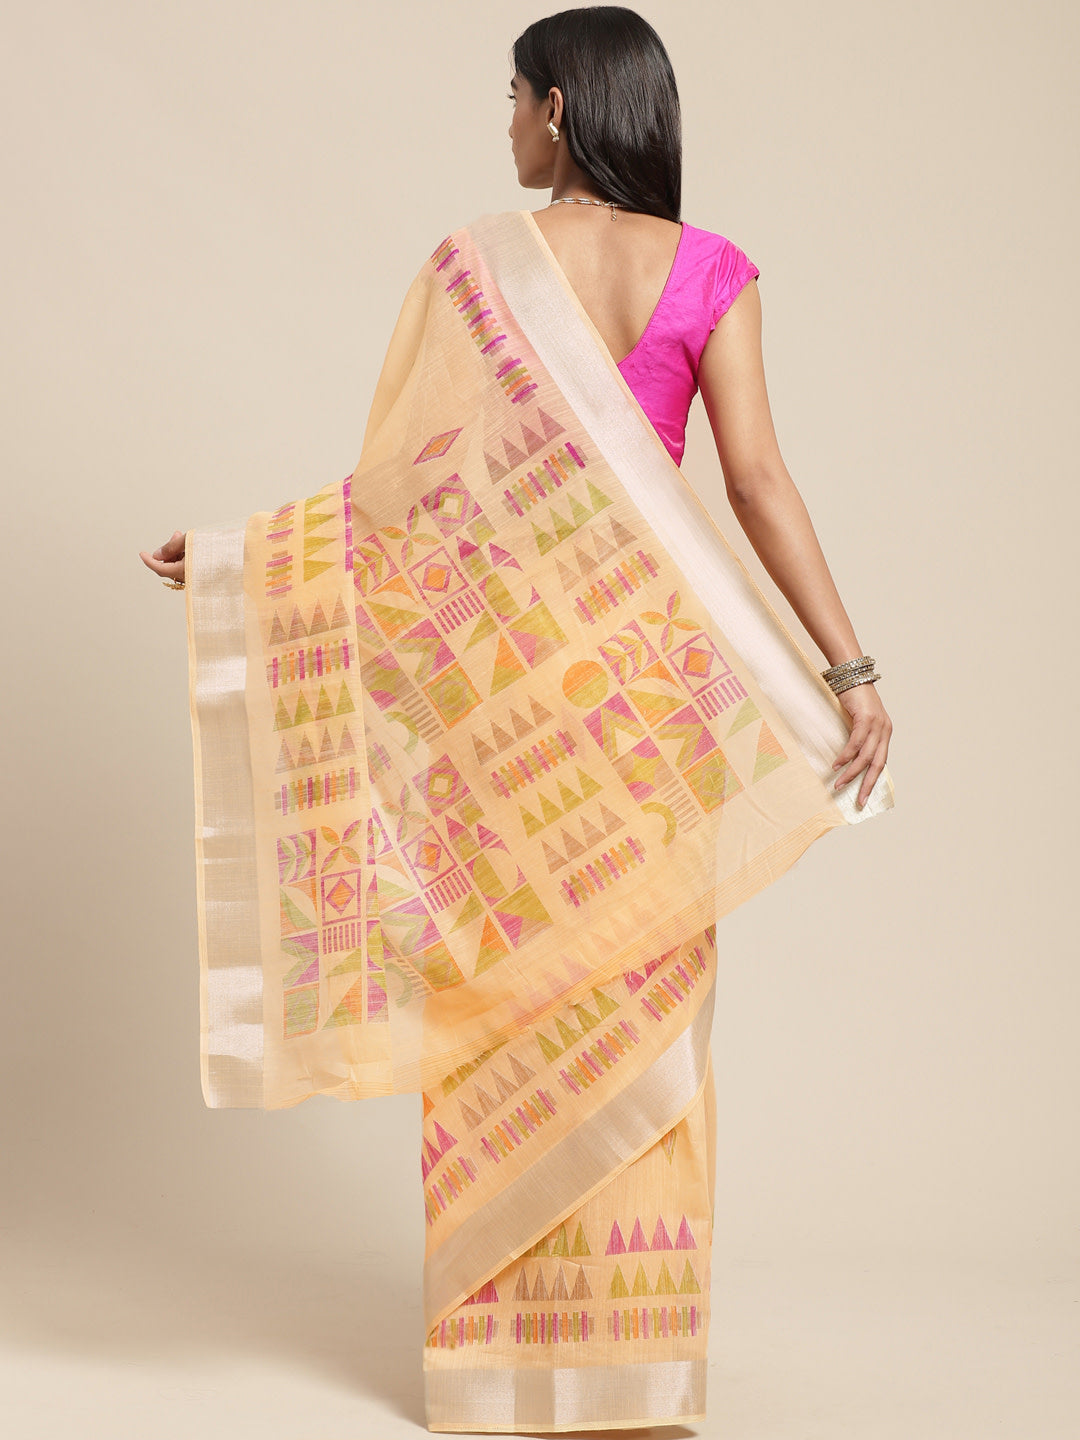 Women's Orange Cotton Blend Printed Saree - Ahika